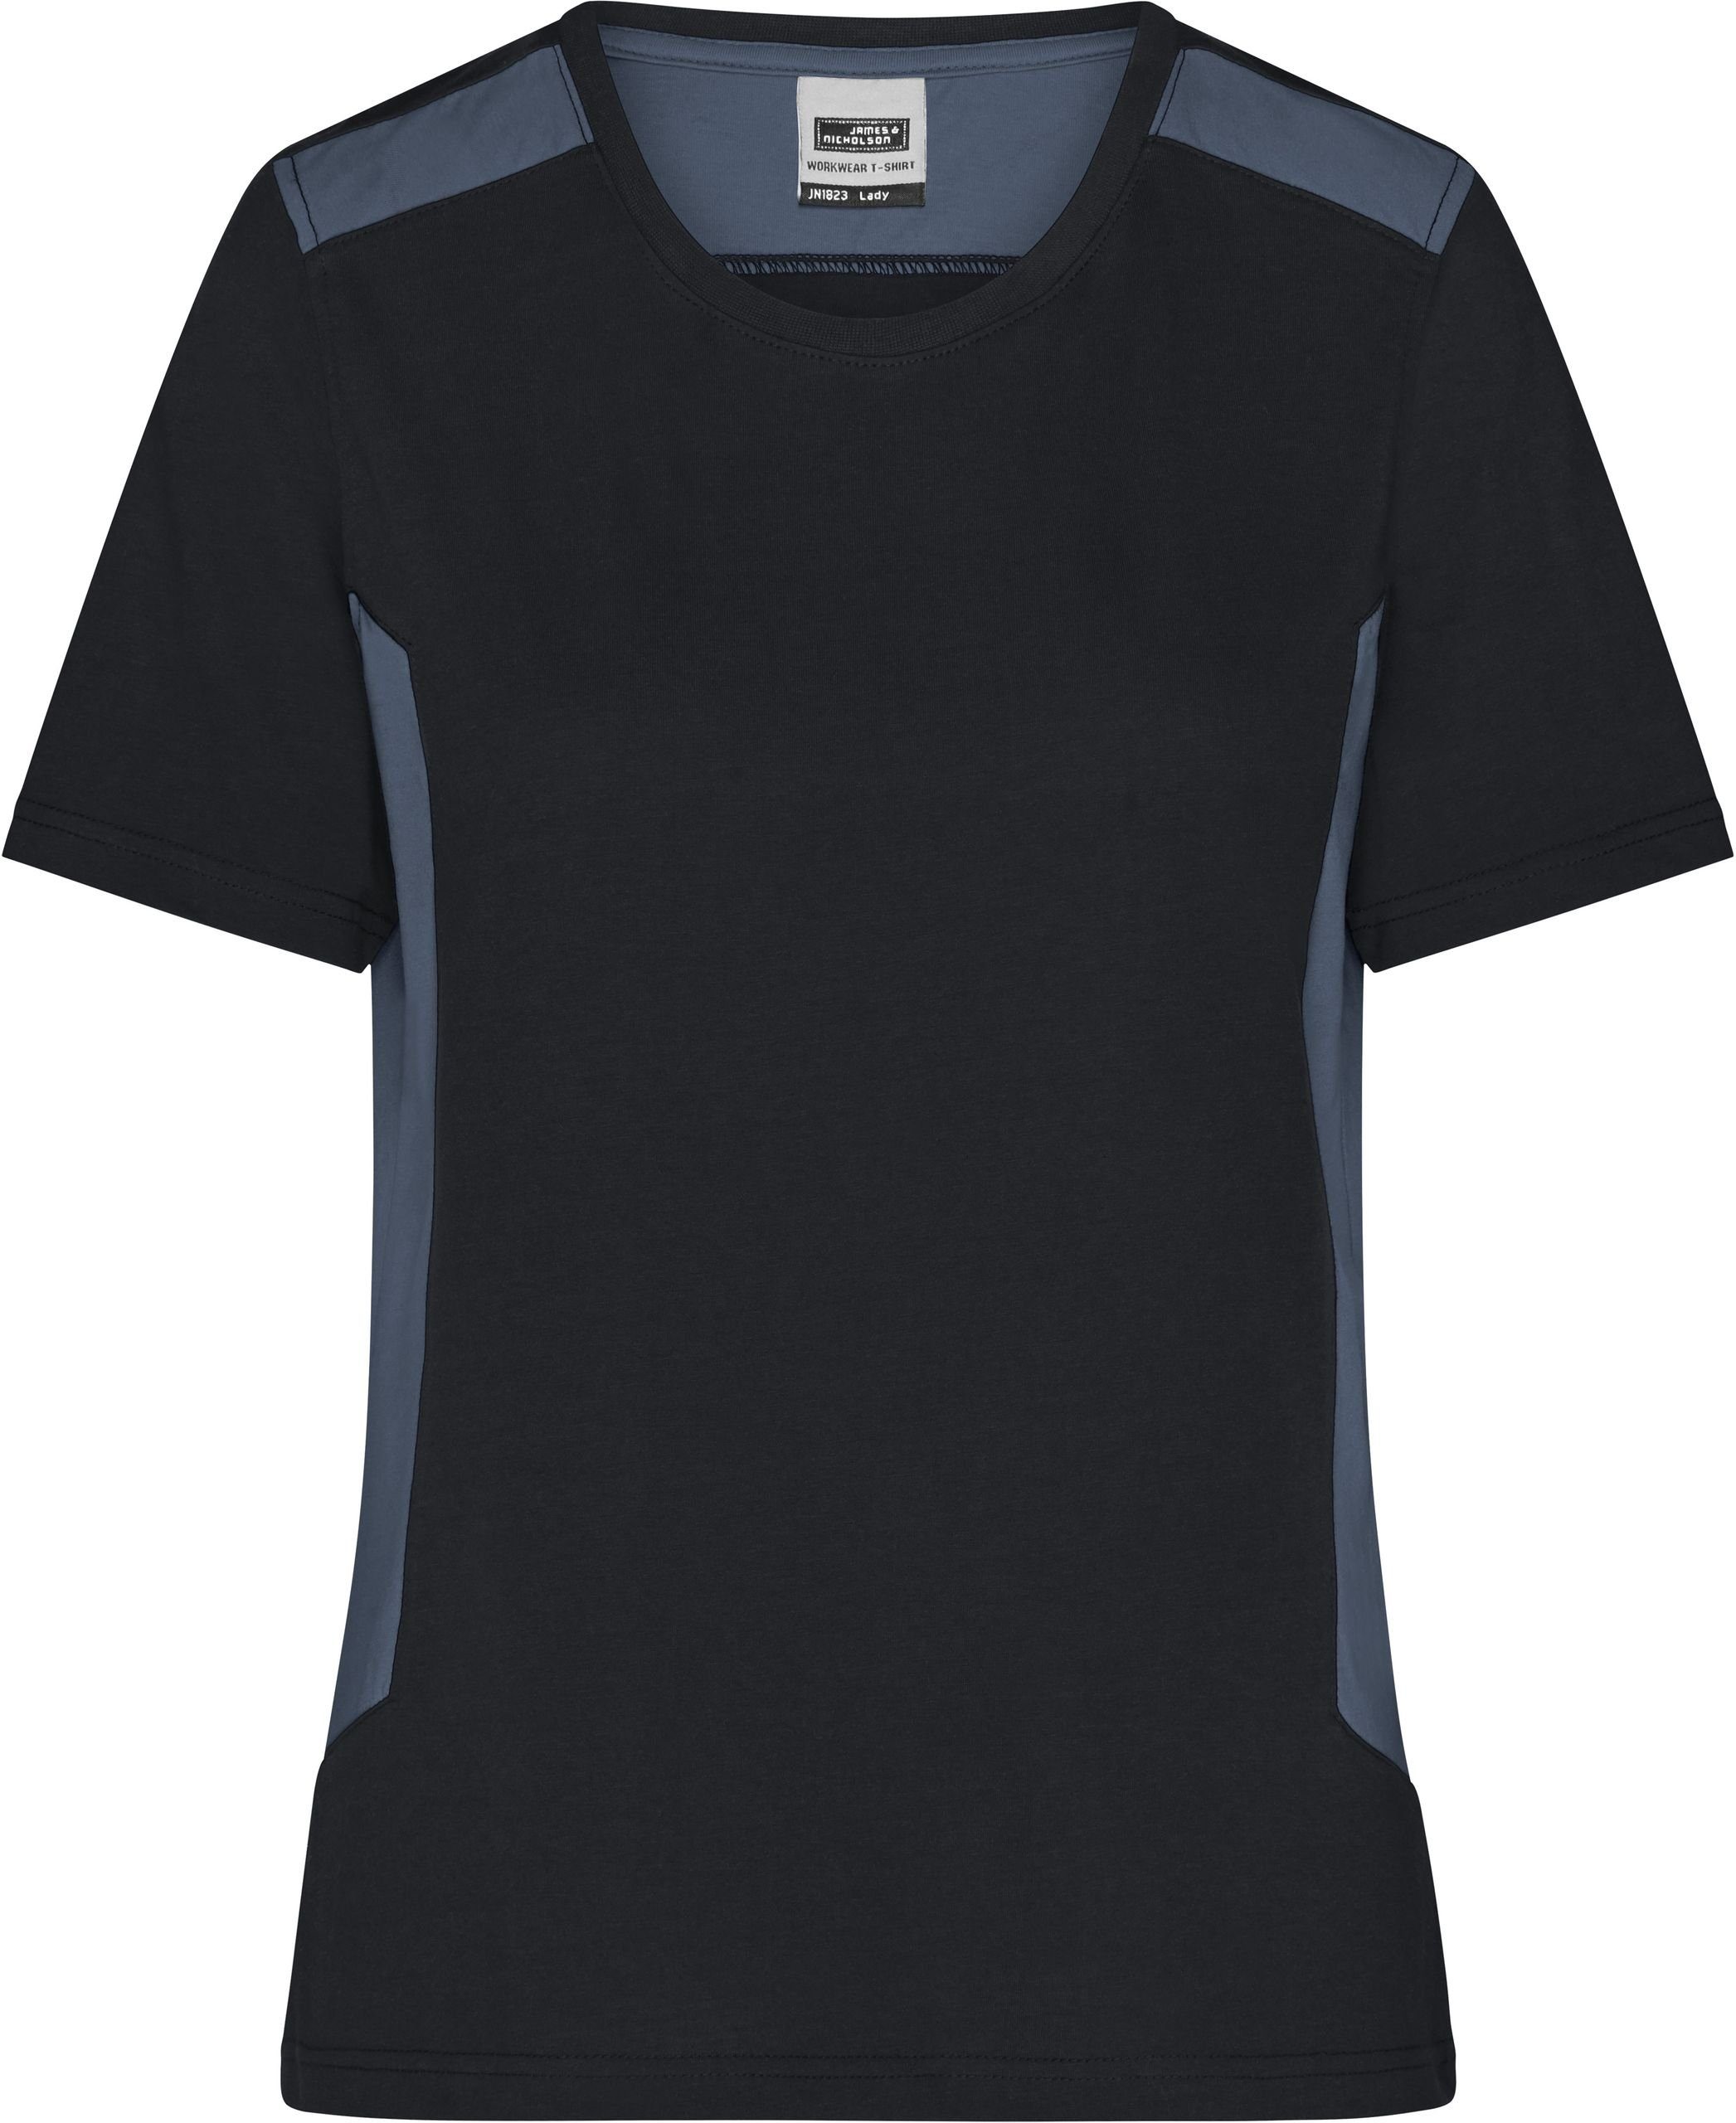 James & Nicholson T-Shirt Damen Workwear T-Shirt - Strong black/carbon